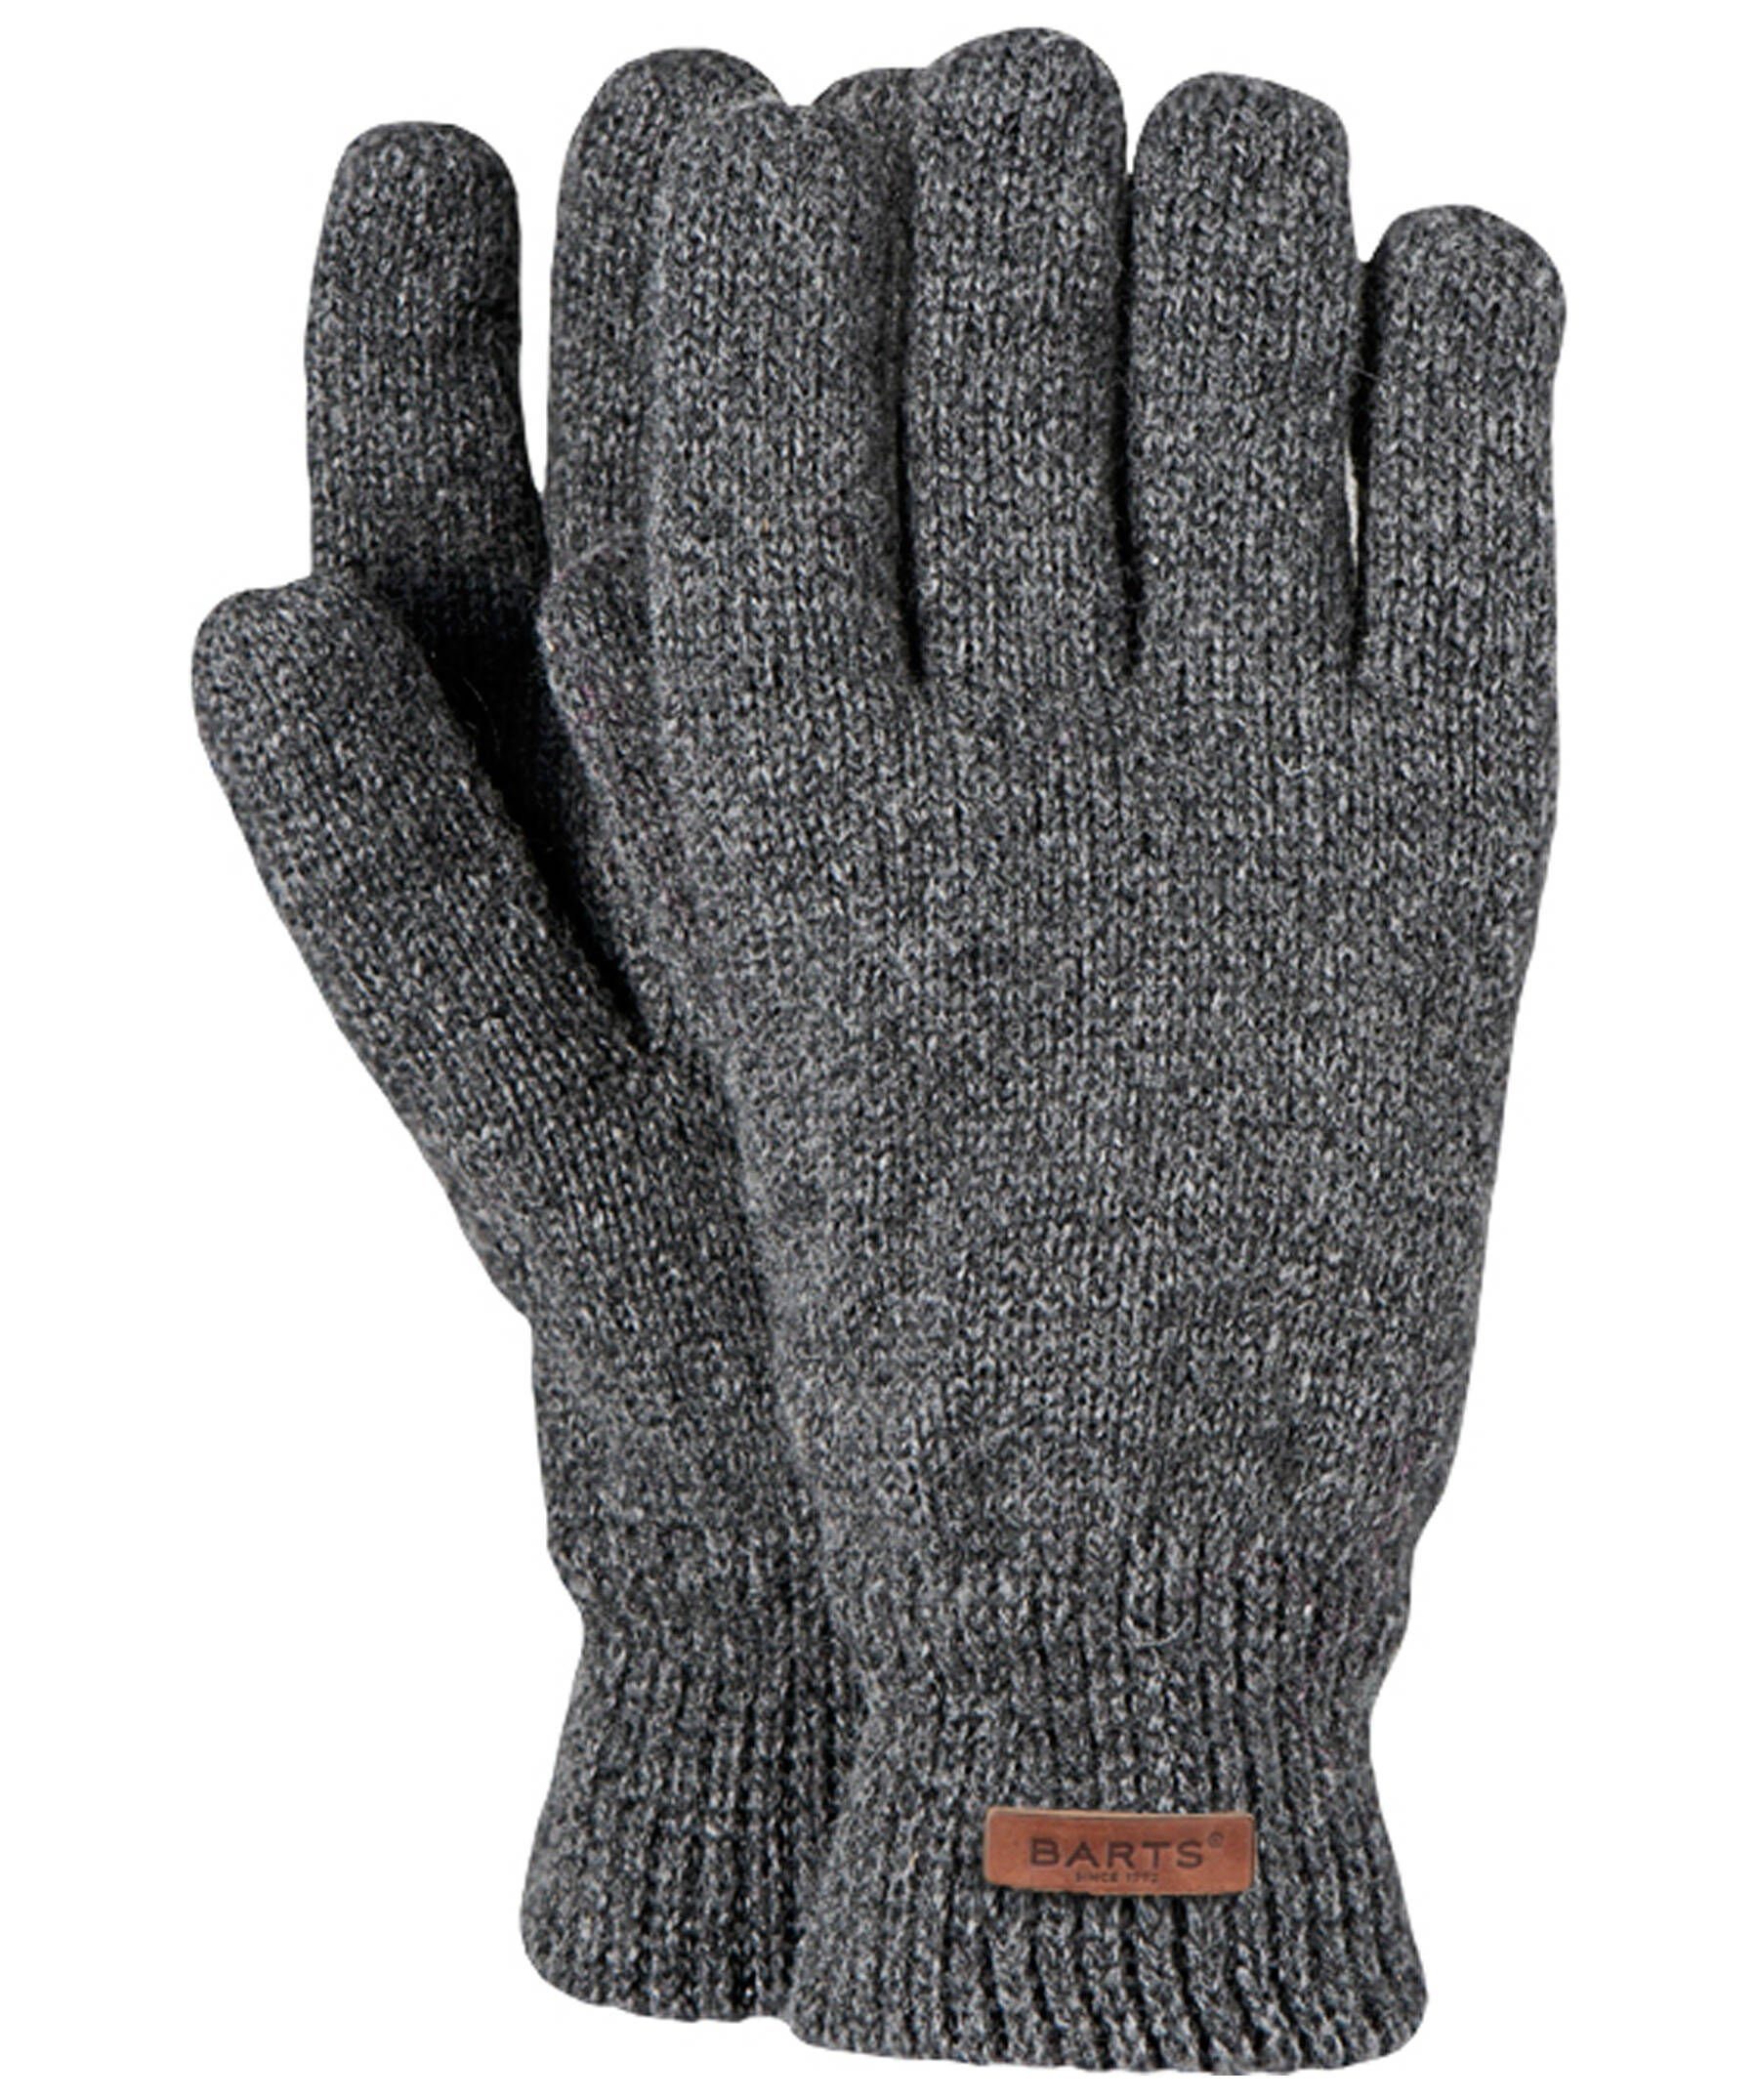 Barts Skihandschuhe Herren Handschuhe Haakon Fingerhandschuhe / (231) Gloves grau